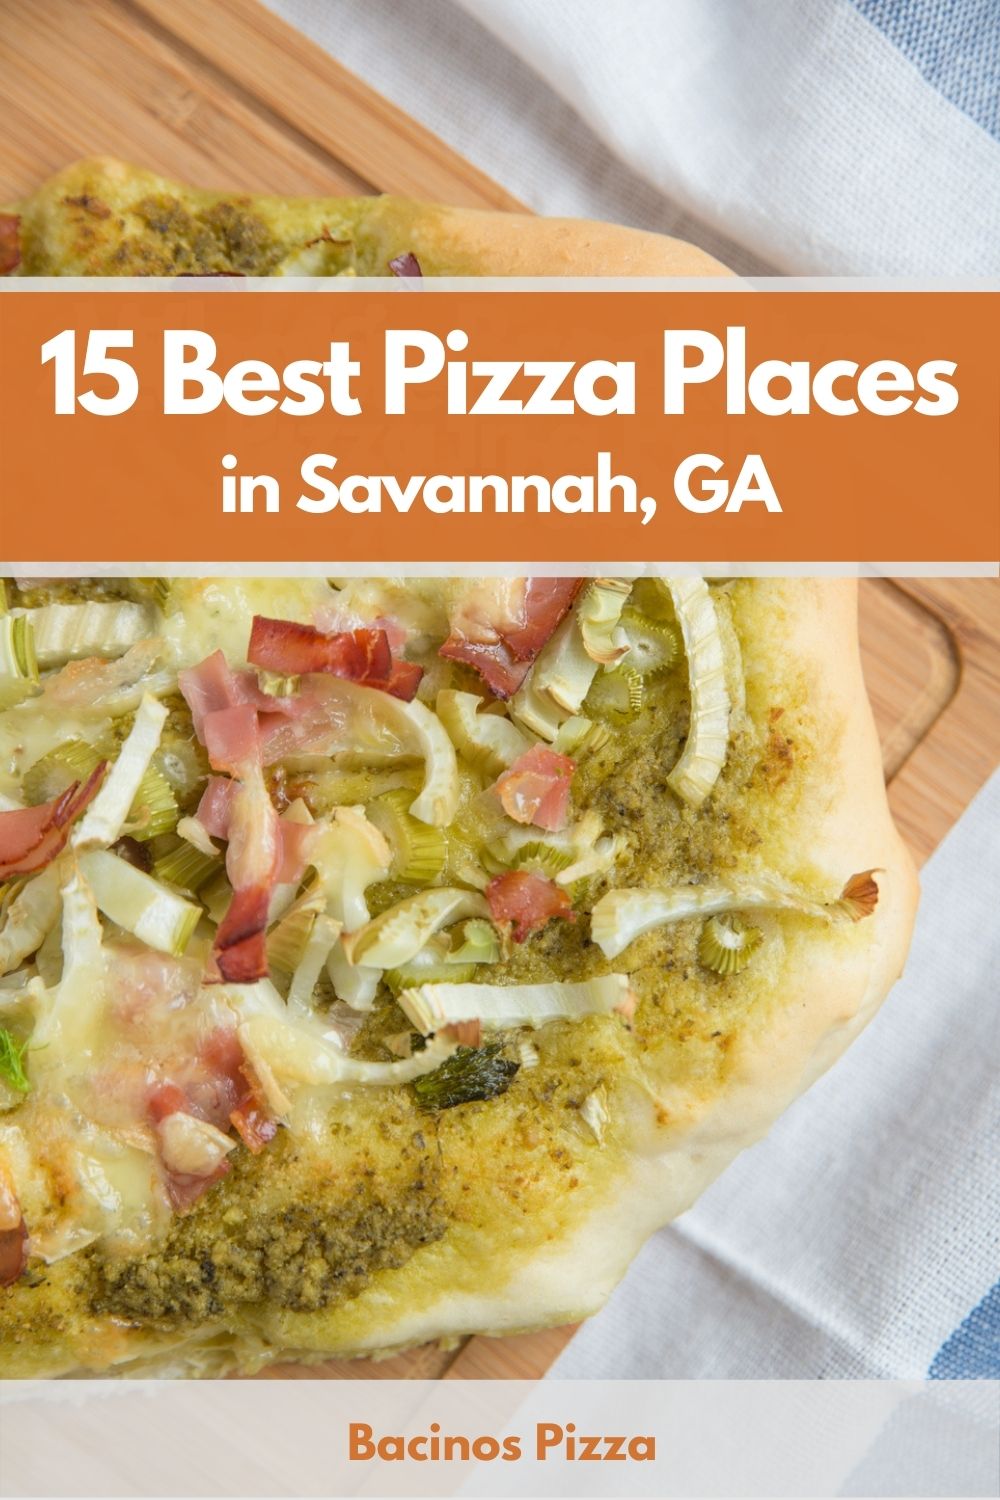 15 Best Pizza Places in Savannah, GA pin 2